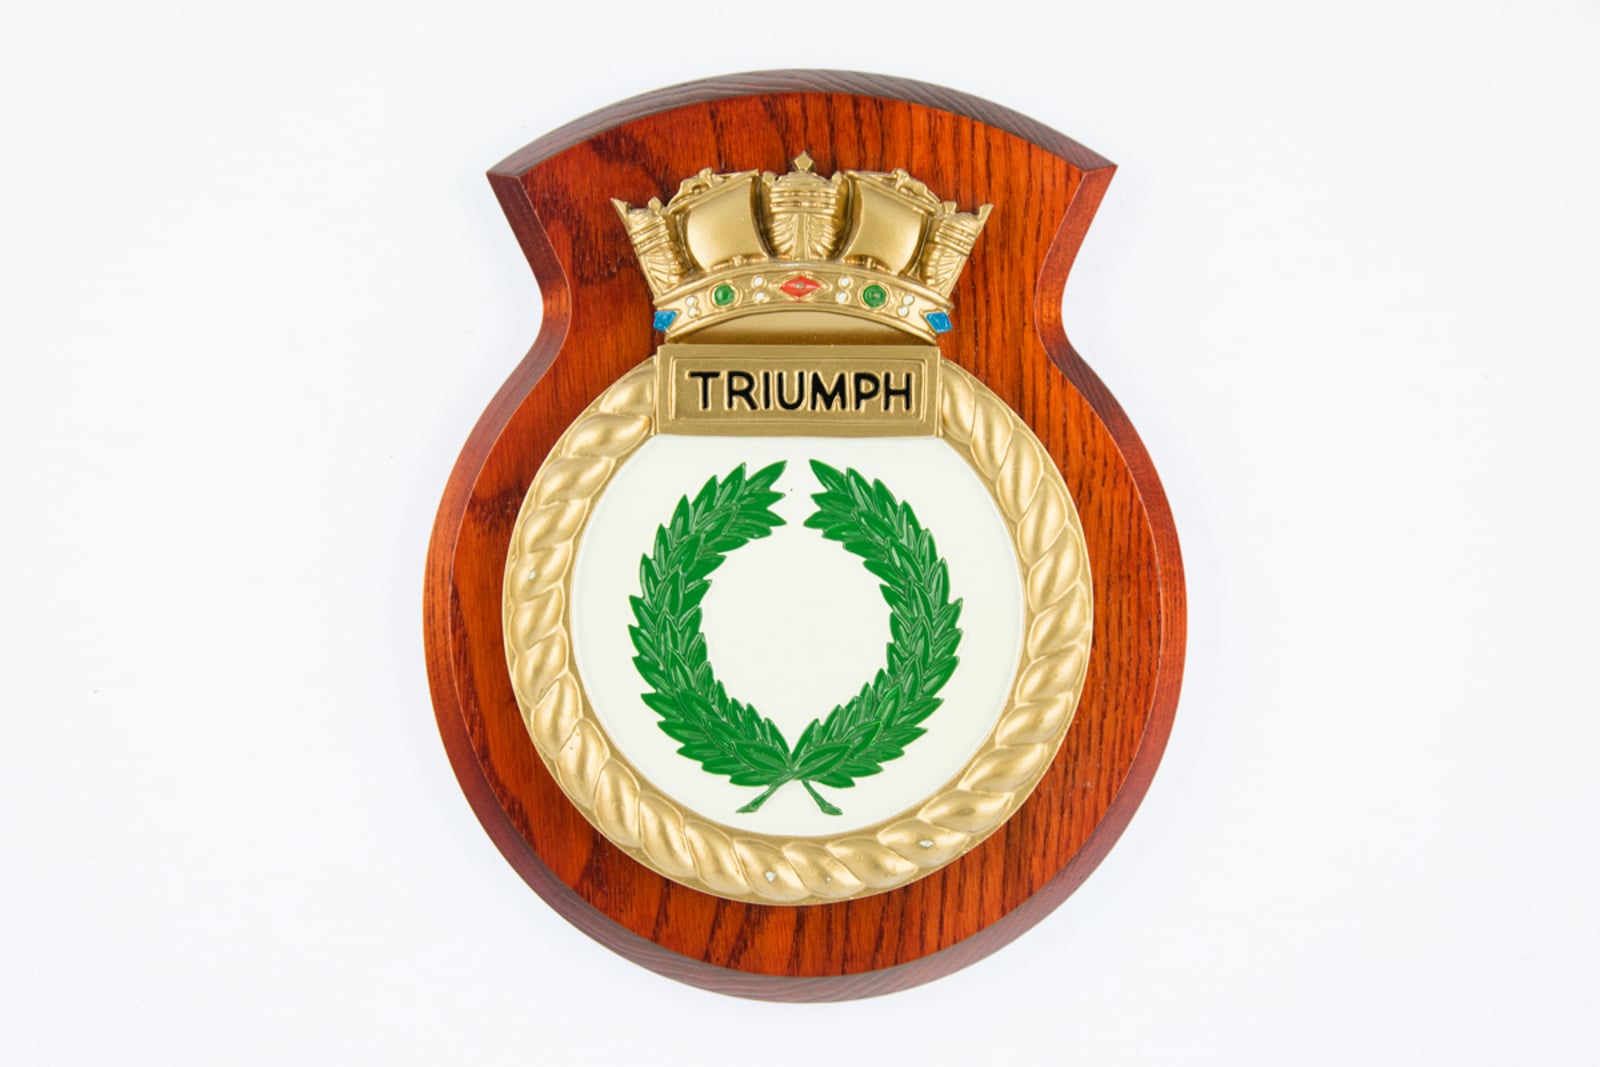 Triumph Plaque